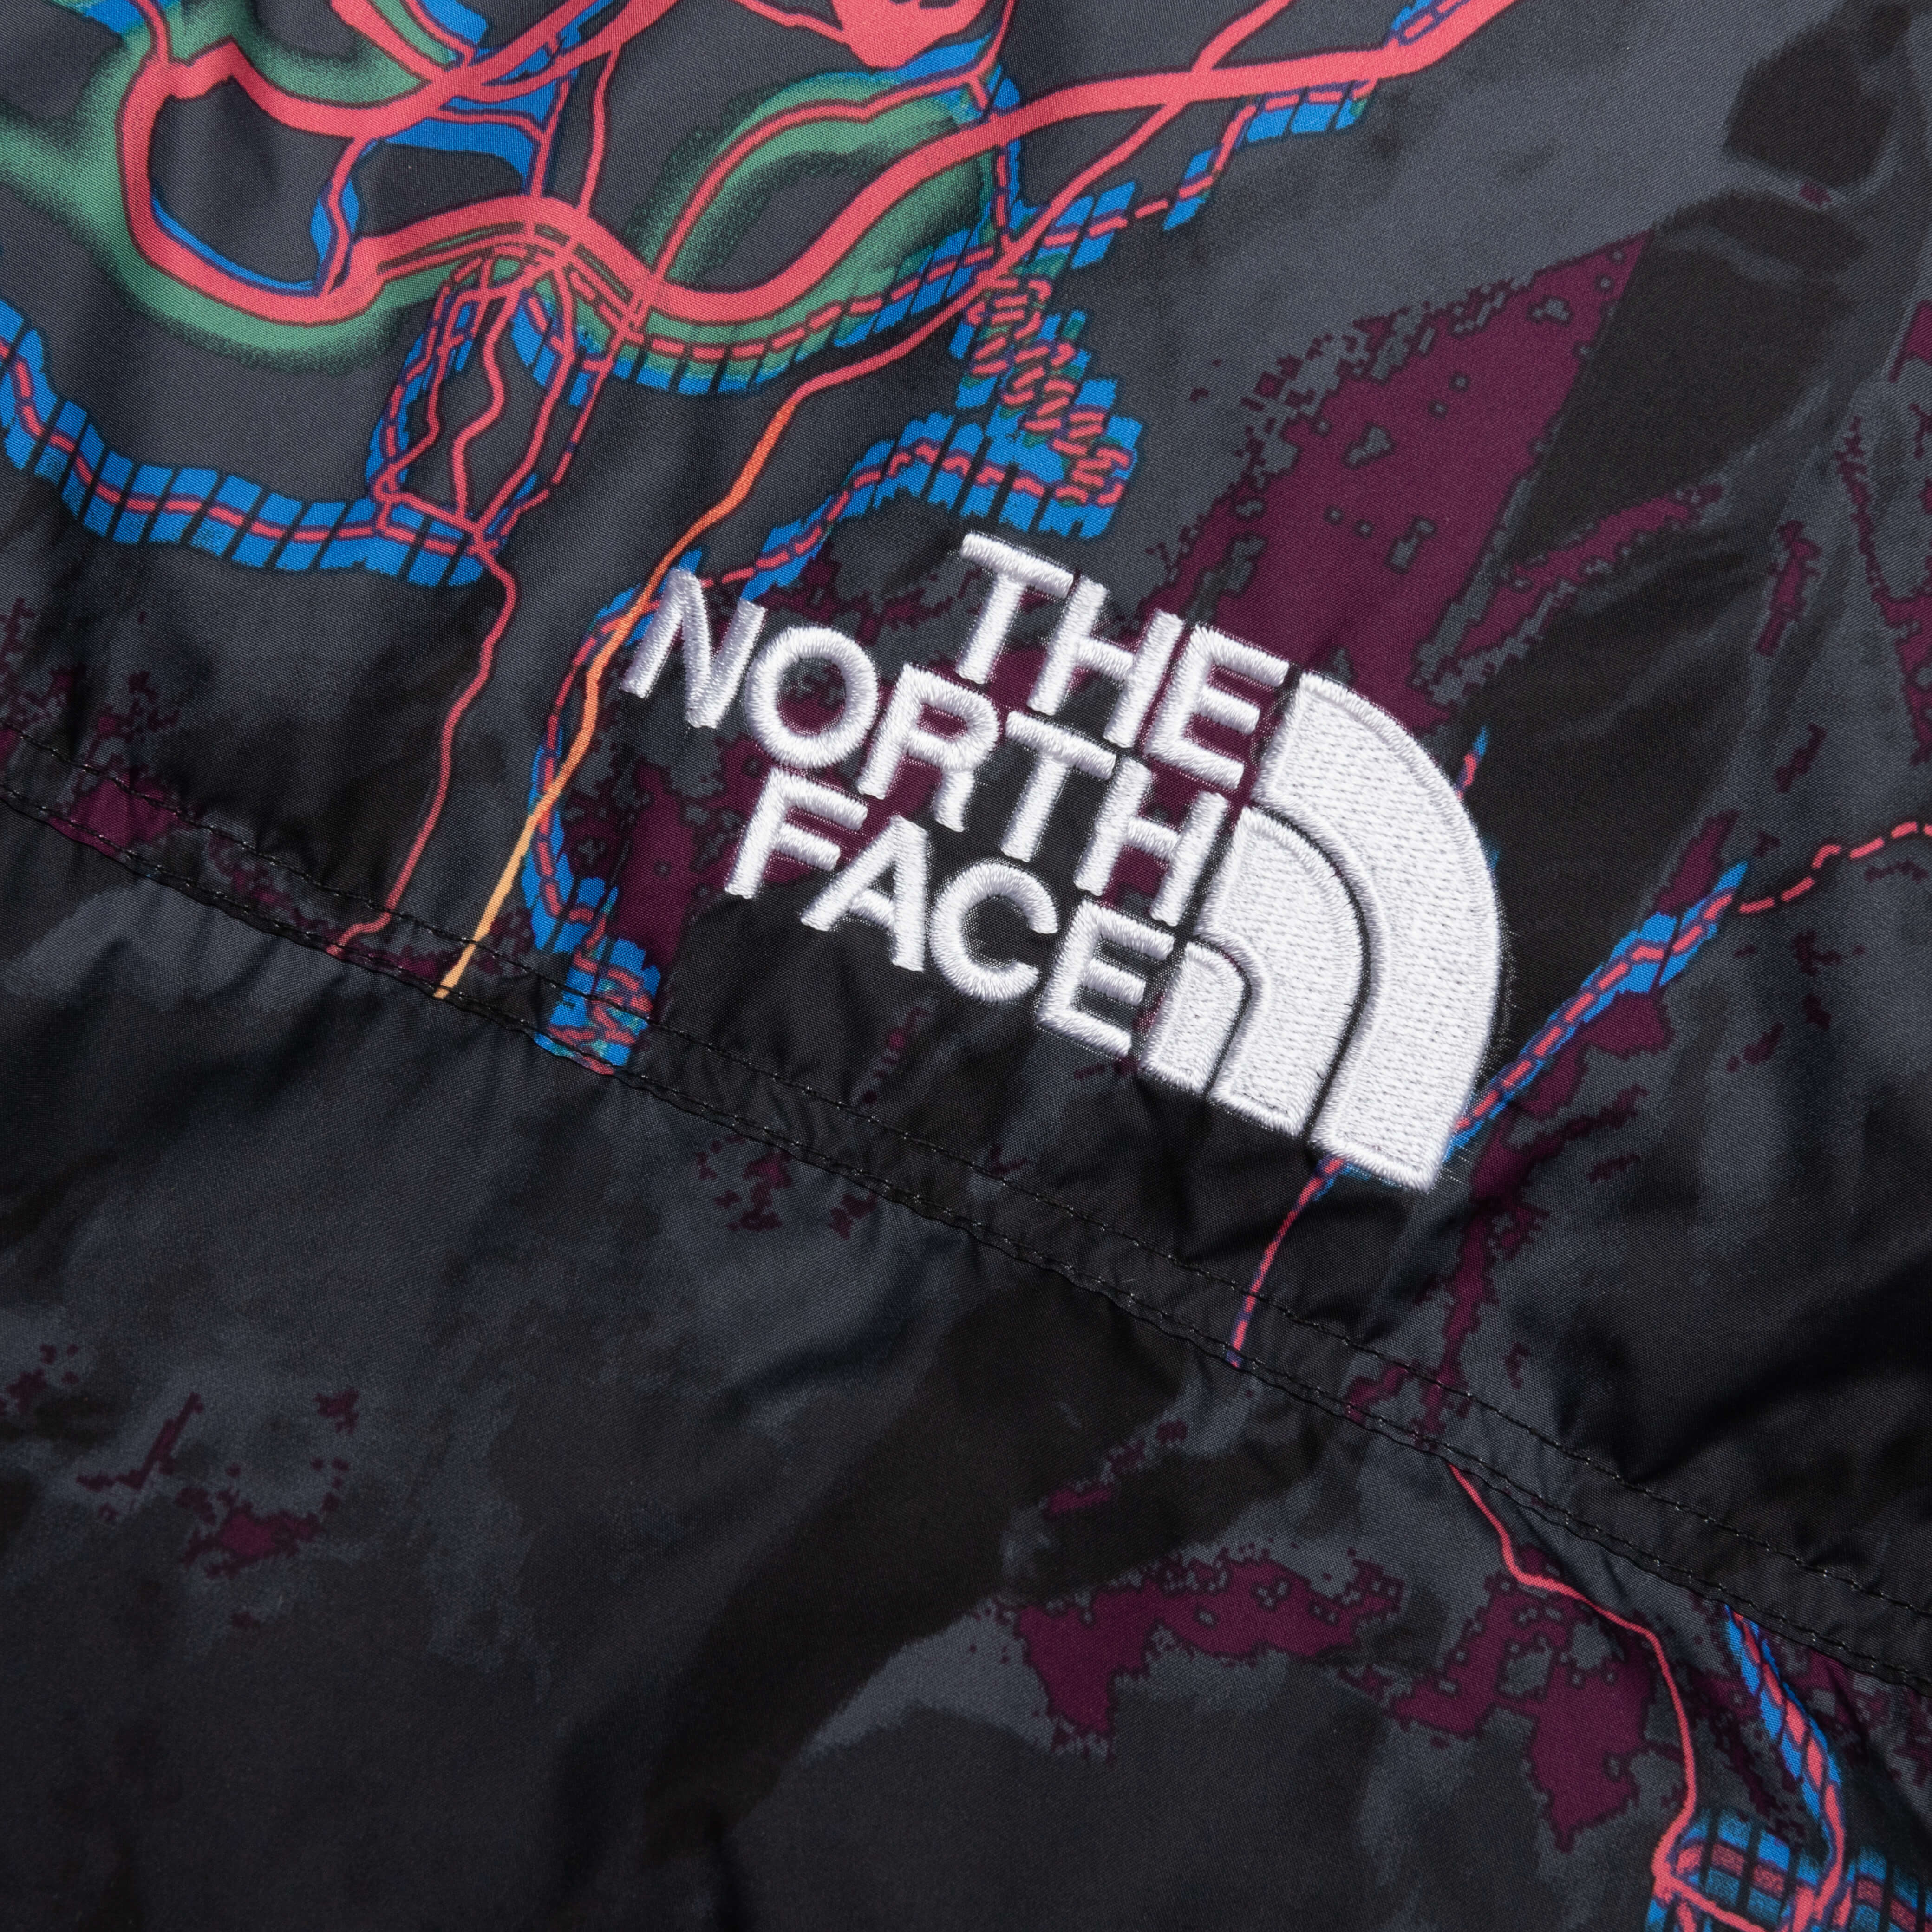 1996 Retro Nuptse Jacket - TNF Black Trail Glow Print – Feature